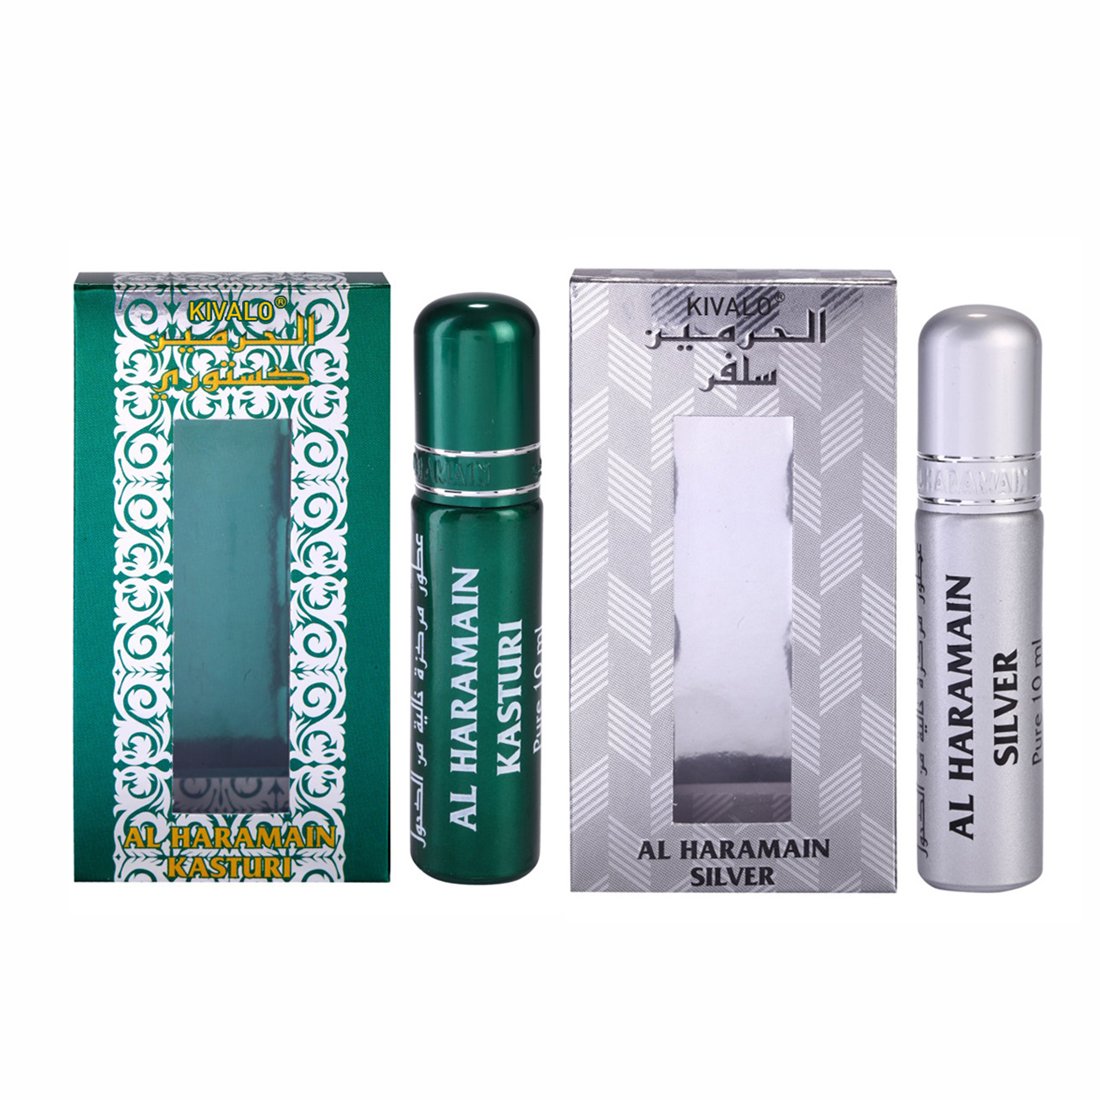 Al Haramain Kasturi & Silver Fragrance Pure Original Roll On Attar Combo Pack of 2 x 10 ml